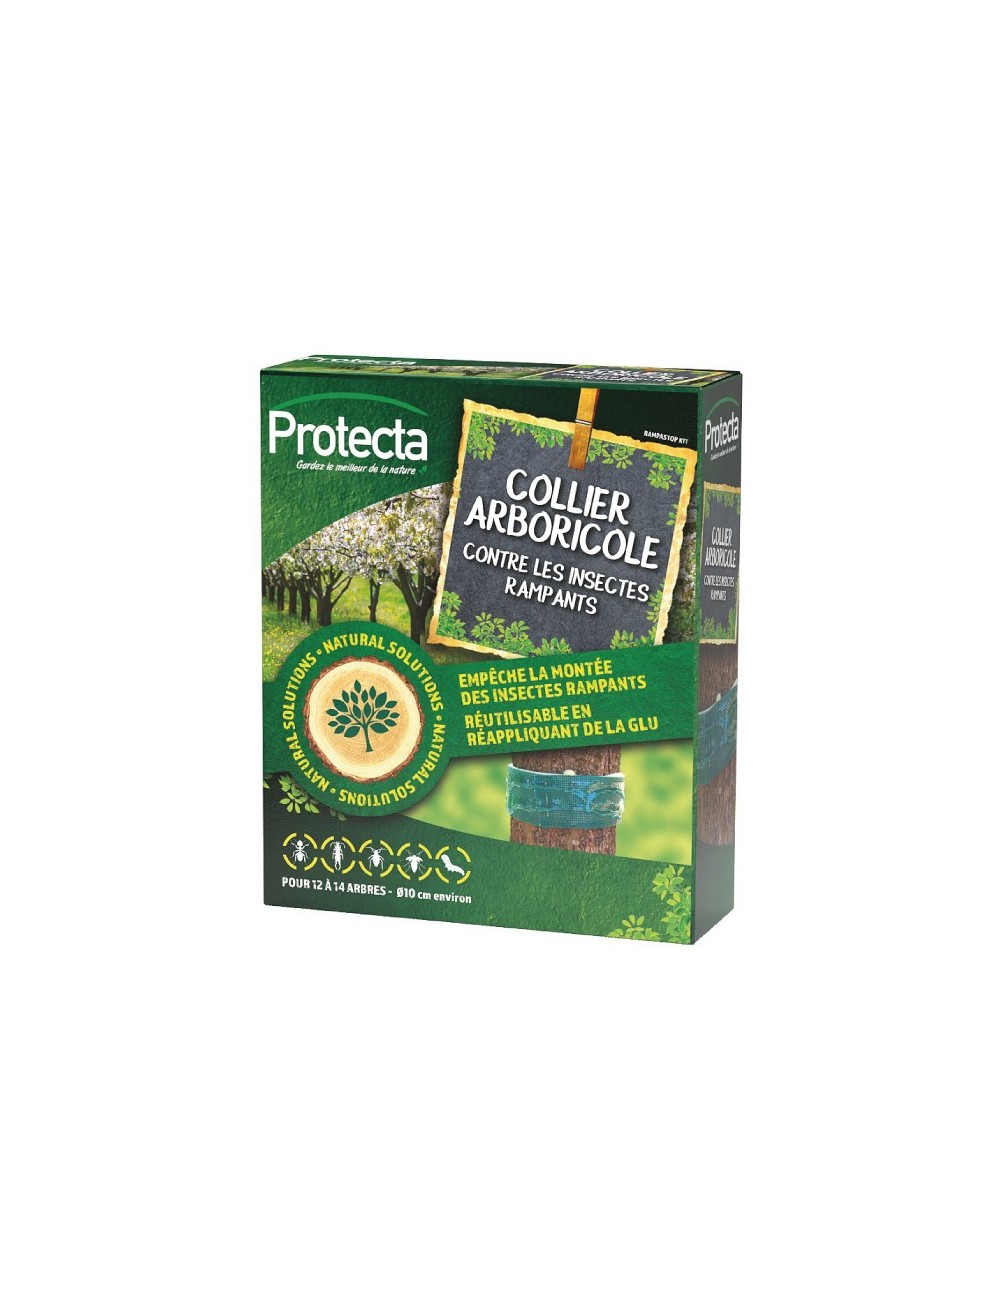 Collier arboricole (Rampastop Kit) Protecta